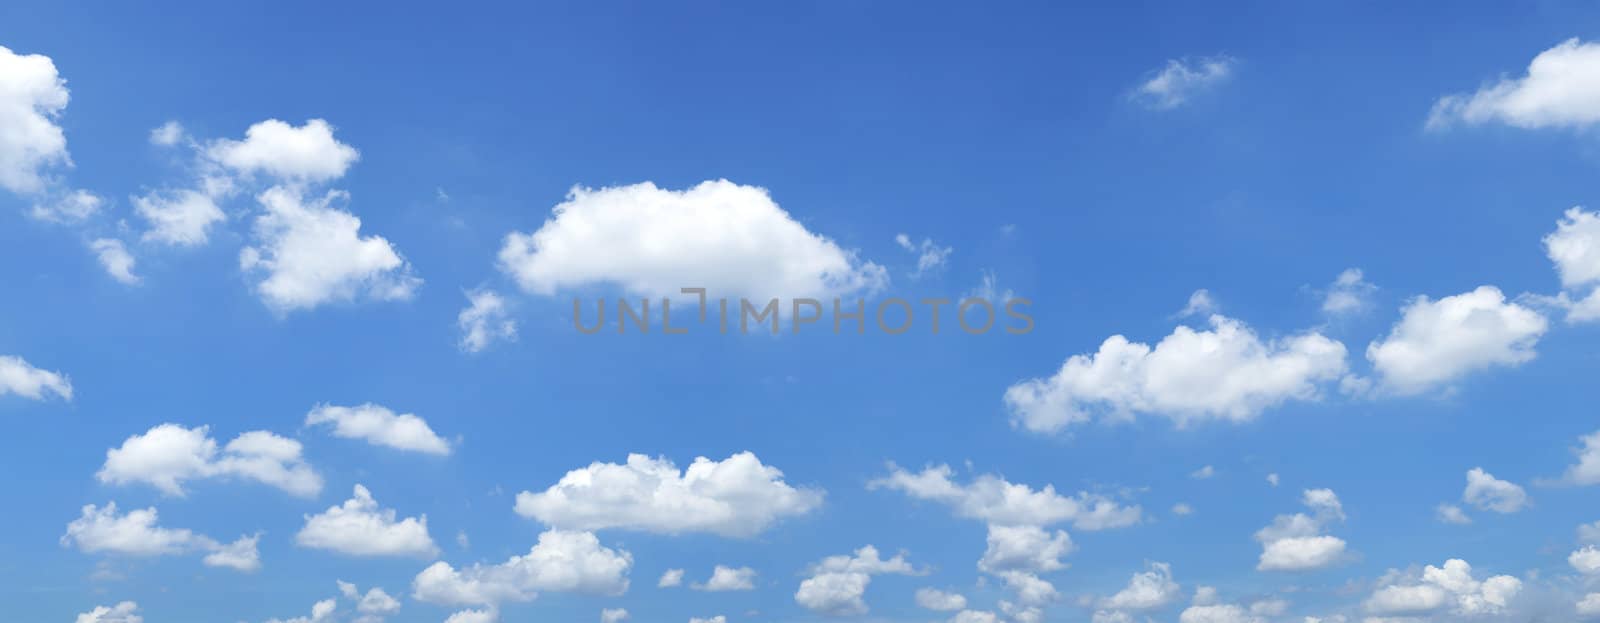 Cloudscape by foto76